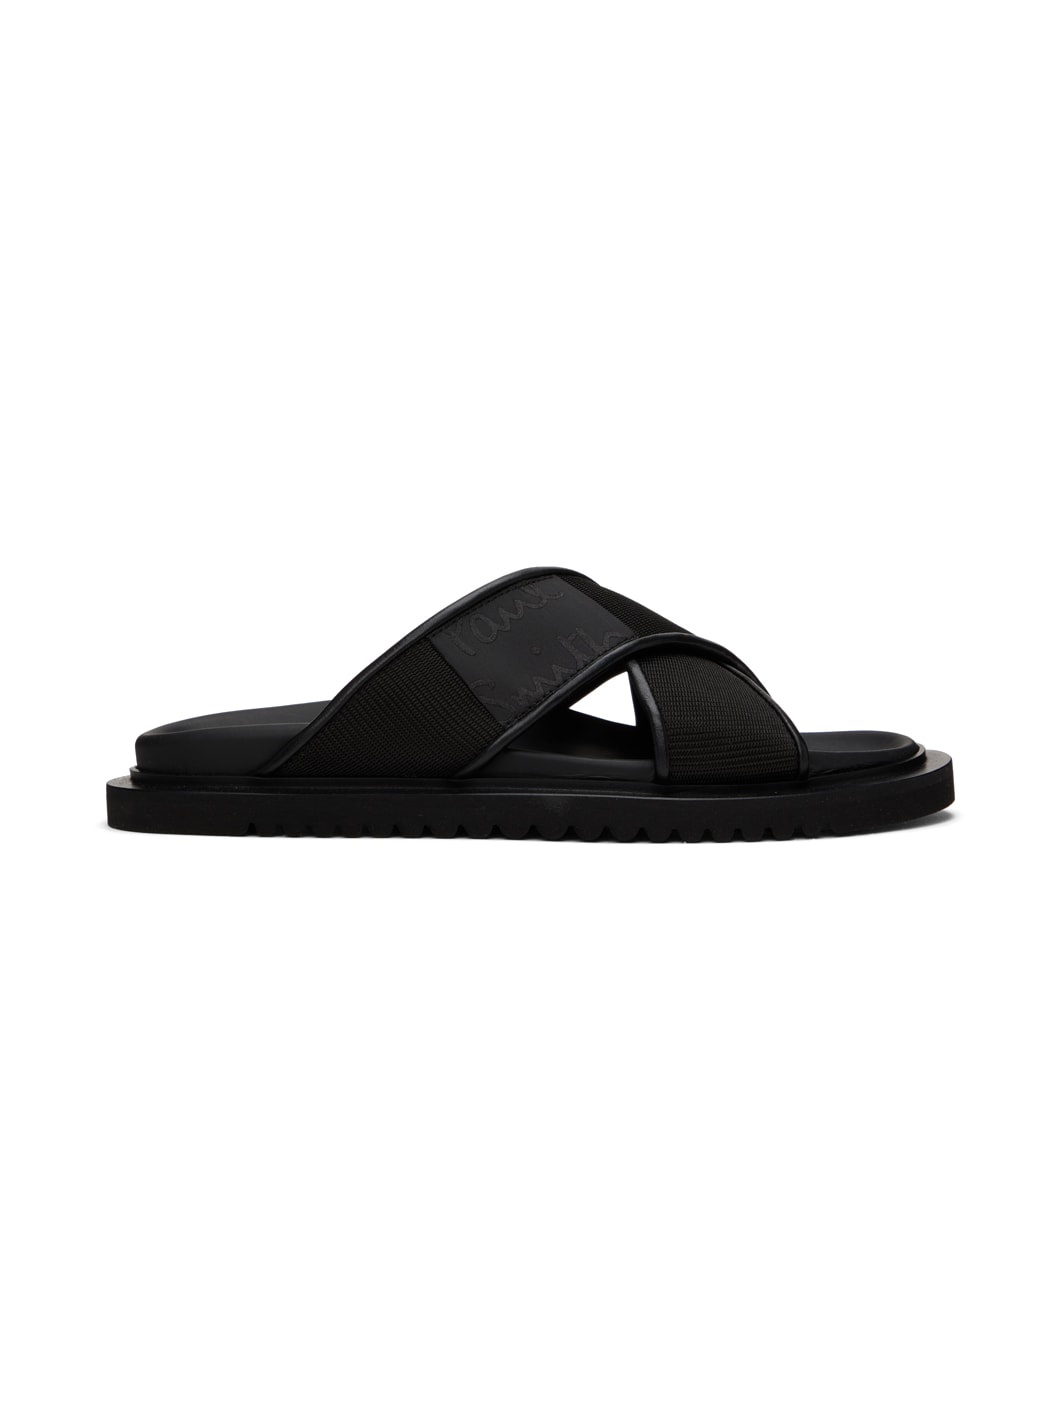 Black Vamori Sandals - 1